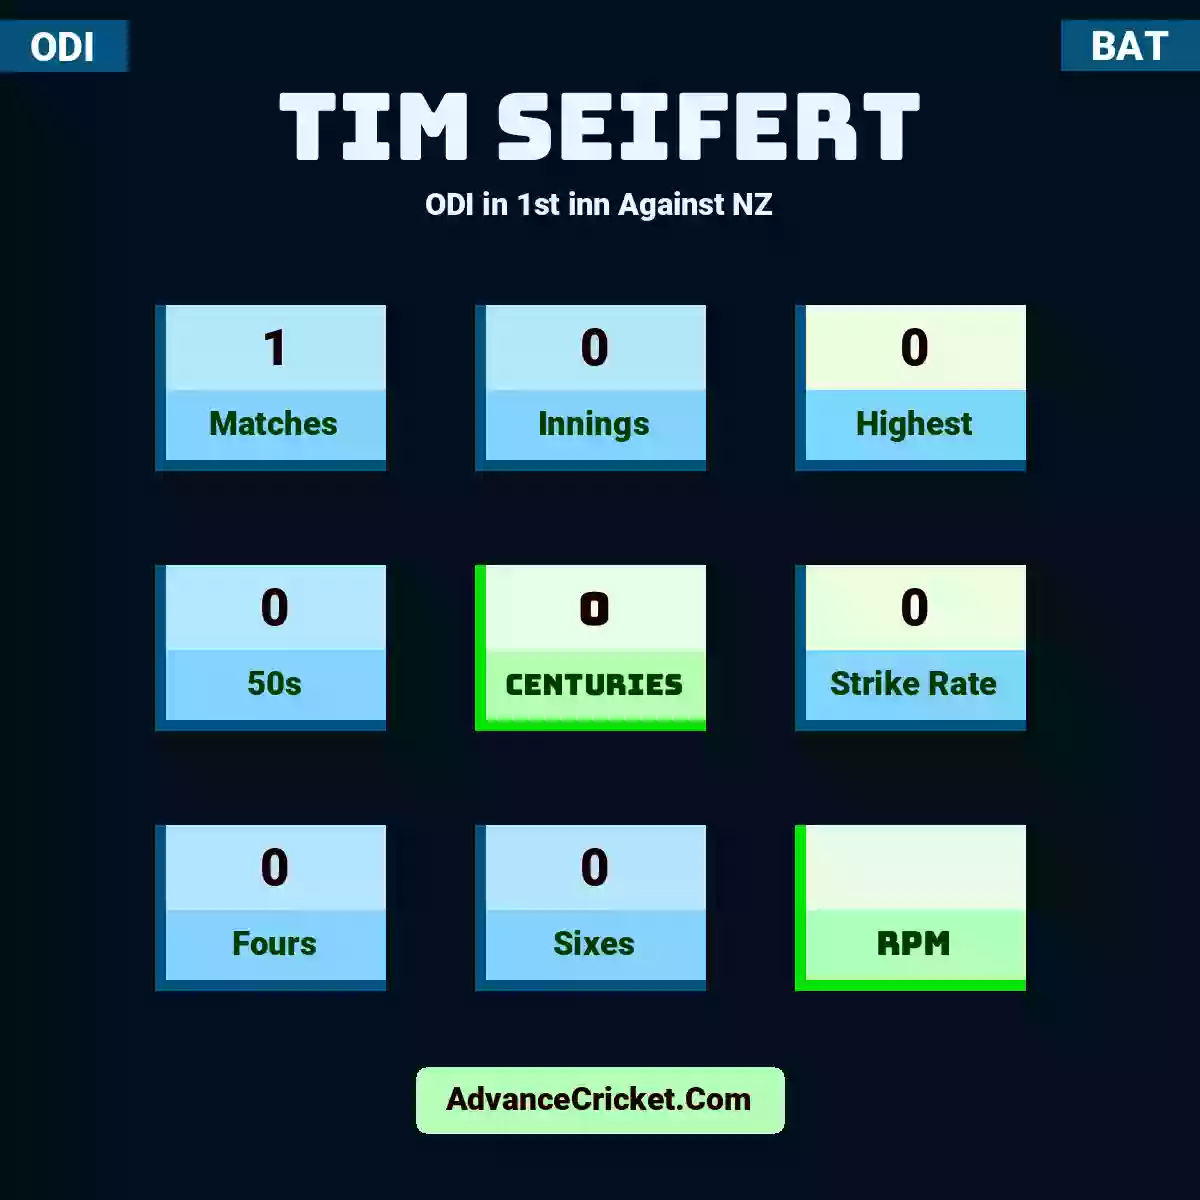 Tim Seifert ODI  in 1st inn Against NZ, Tim Seifert played 1 matches, scored 0 runs as highest, 0 half-centuries, and 0 centuries, with a strike rate of 0. T.Seifert hit 0 fours and 0 sixes.